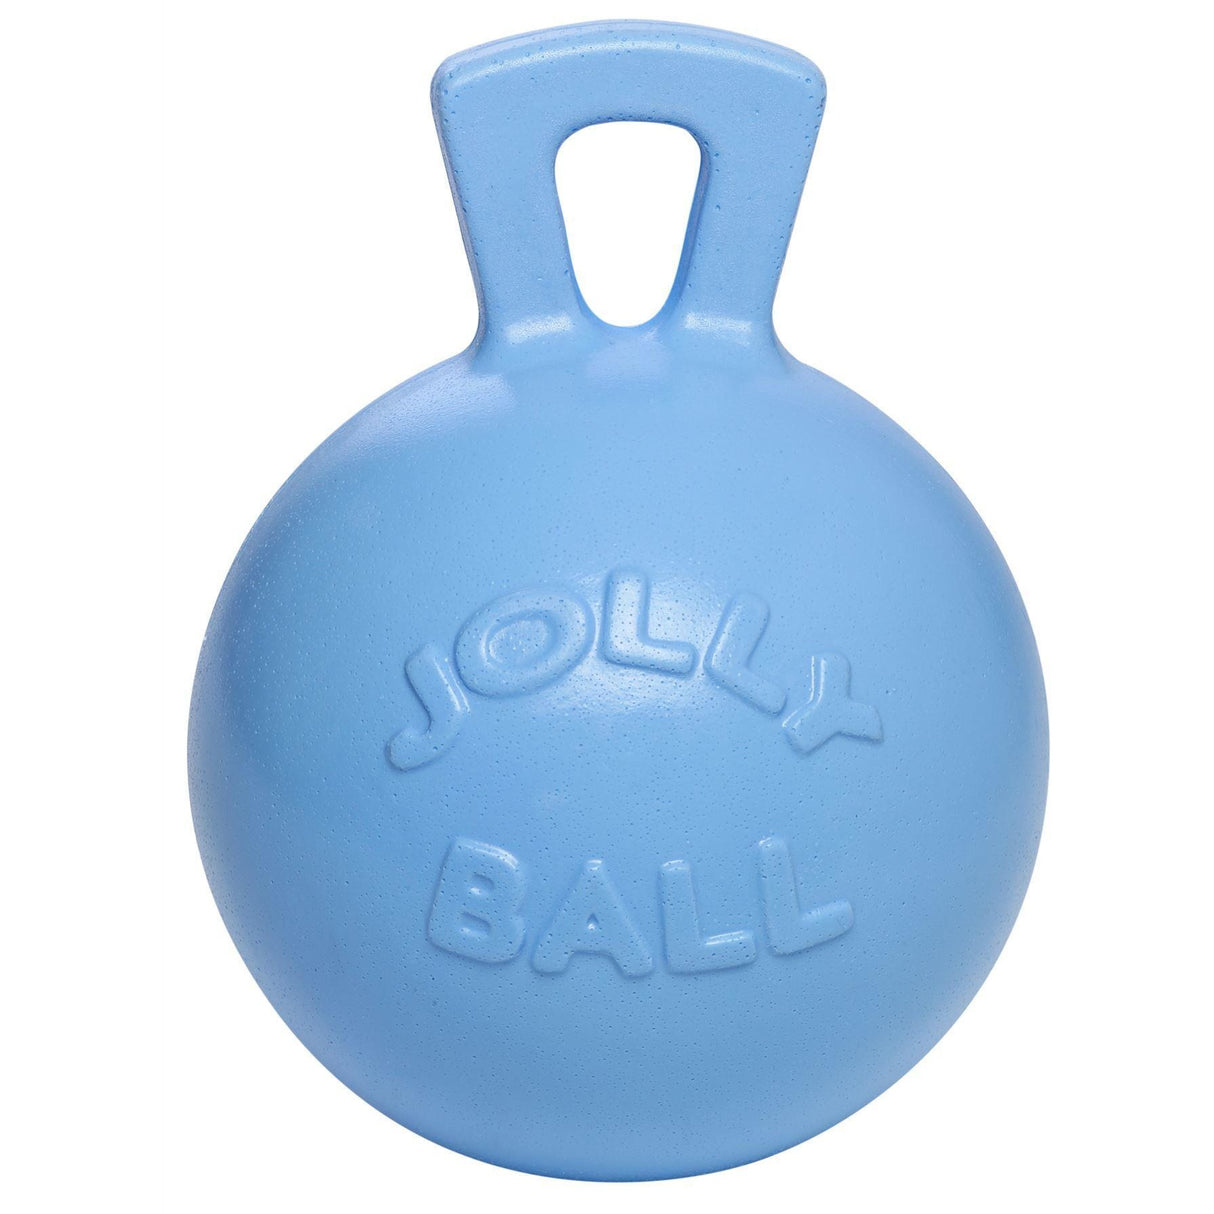 HORSEMEN'S PRIDE Double Jolly Ball 4922